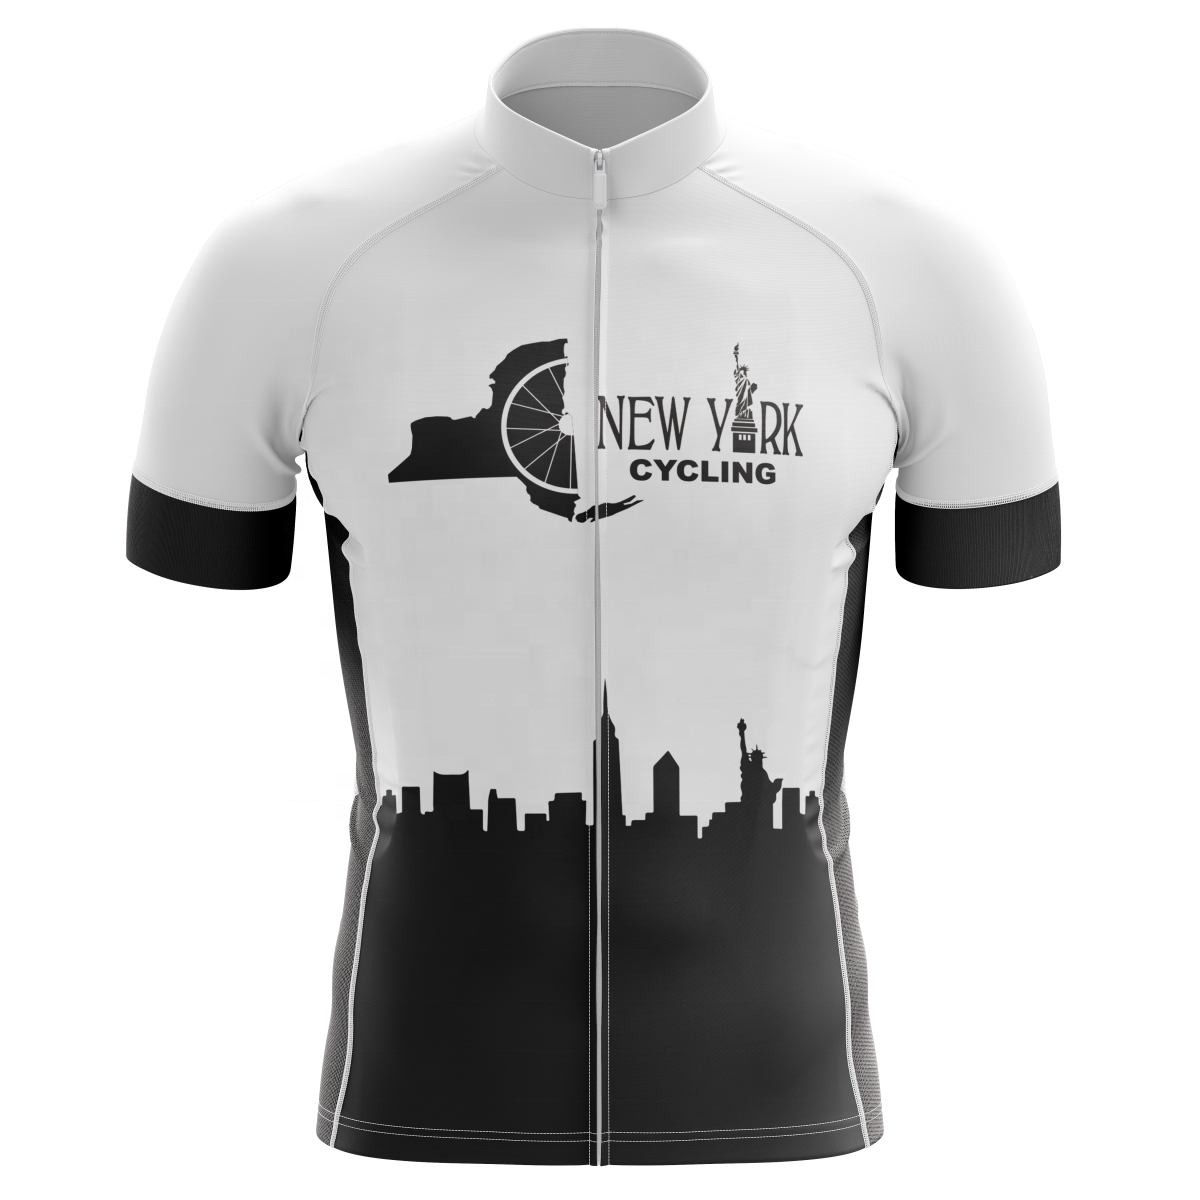 New York Short Sleeve Jersey White